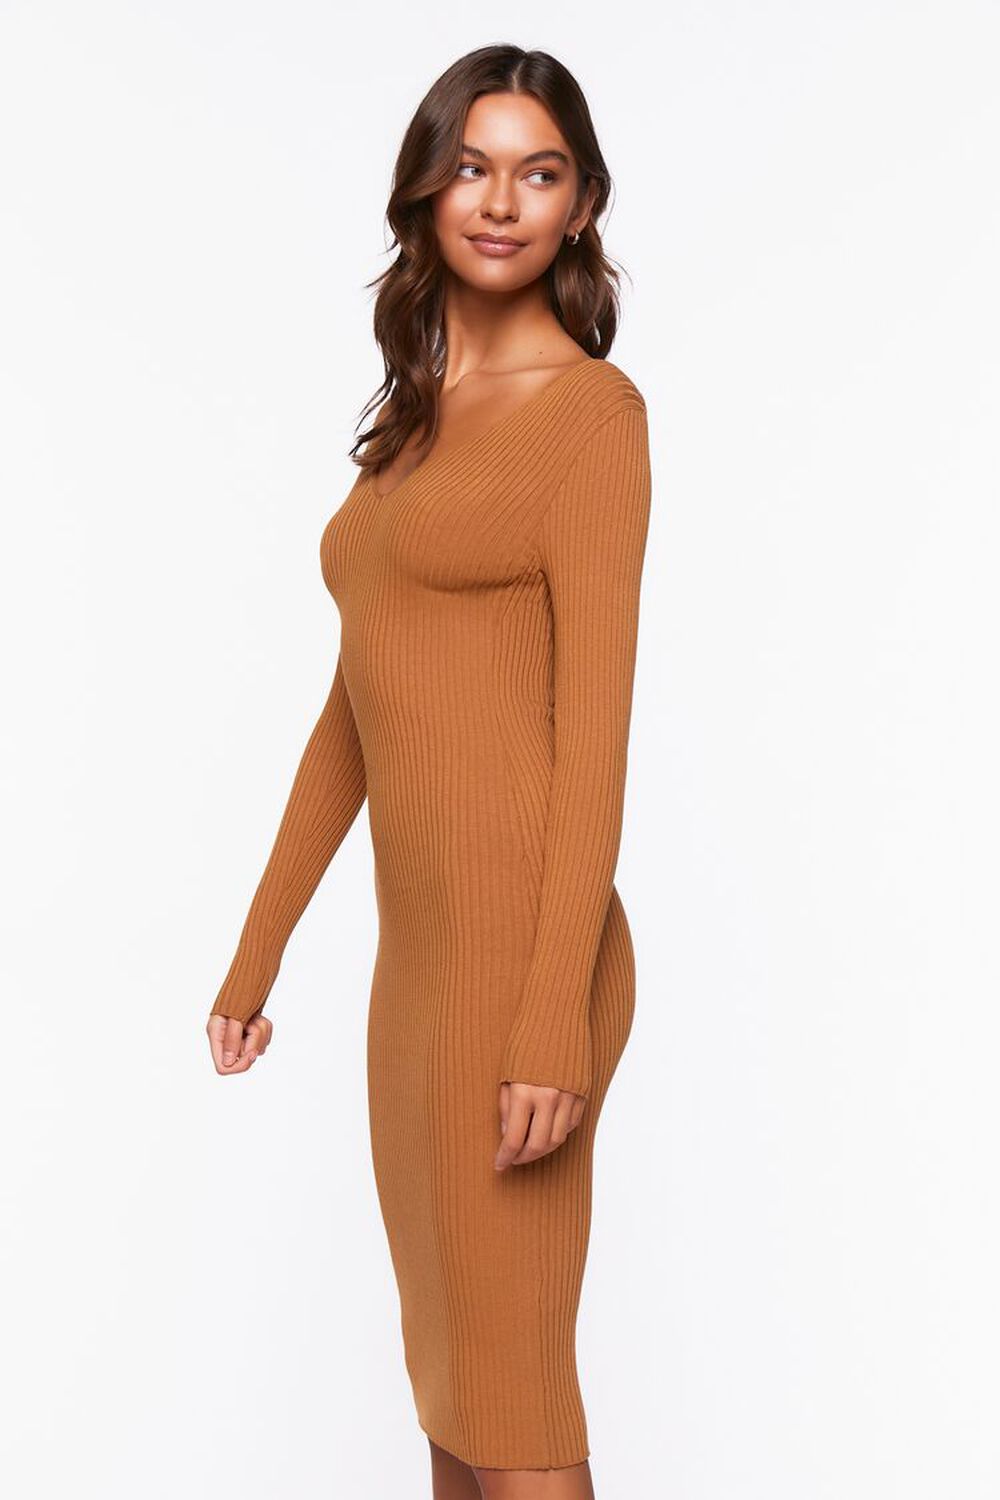 BROWN Sweater-Knit Midi Dress, image 2